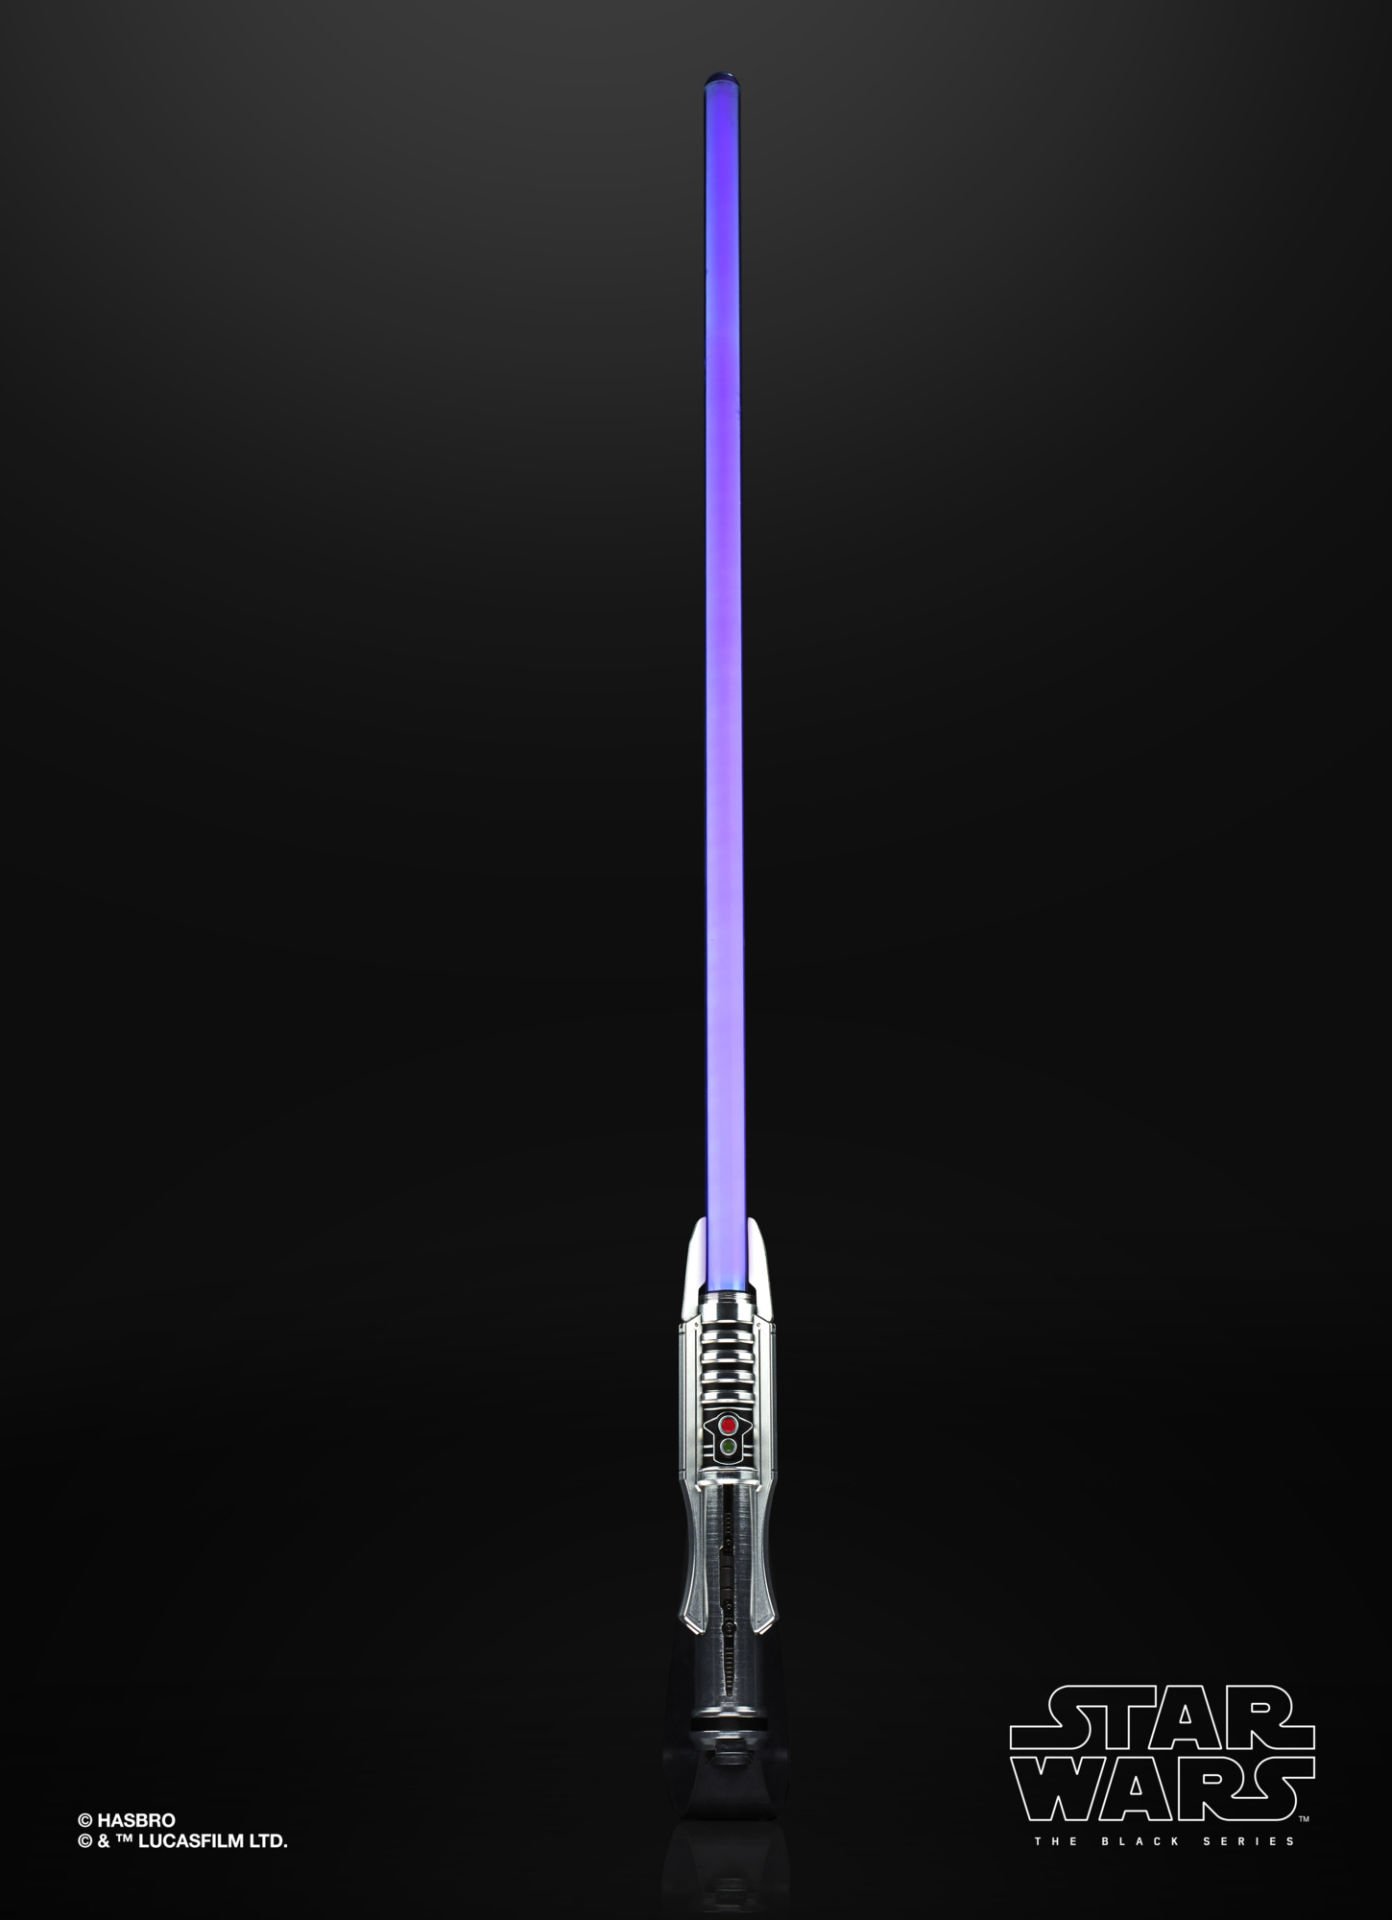 Star Wars Black Series Darth Revan Force FX Elite Elektronik Işın Kılıcı (Lightsaber)